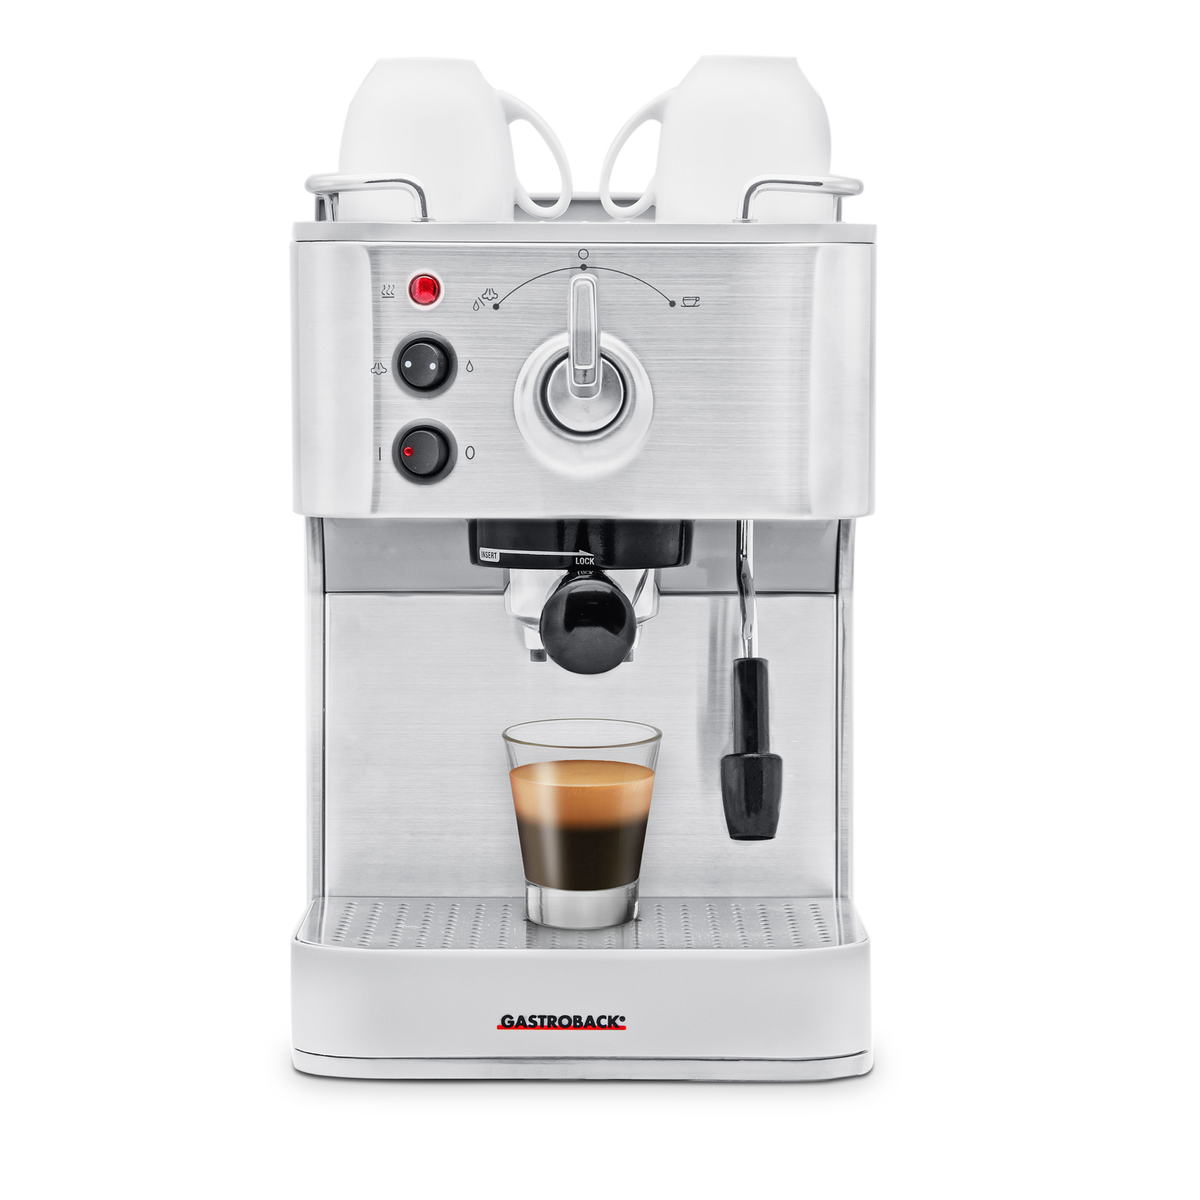 Gastroback 42606 Design espresso plus cafetera puls 1250 w 1 liter 0 decibeles acero inoxidable plata 1250w express 15 2